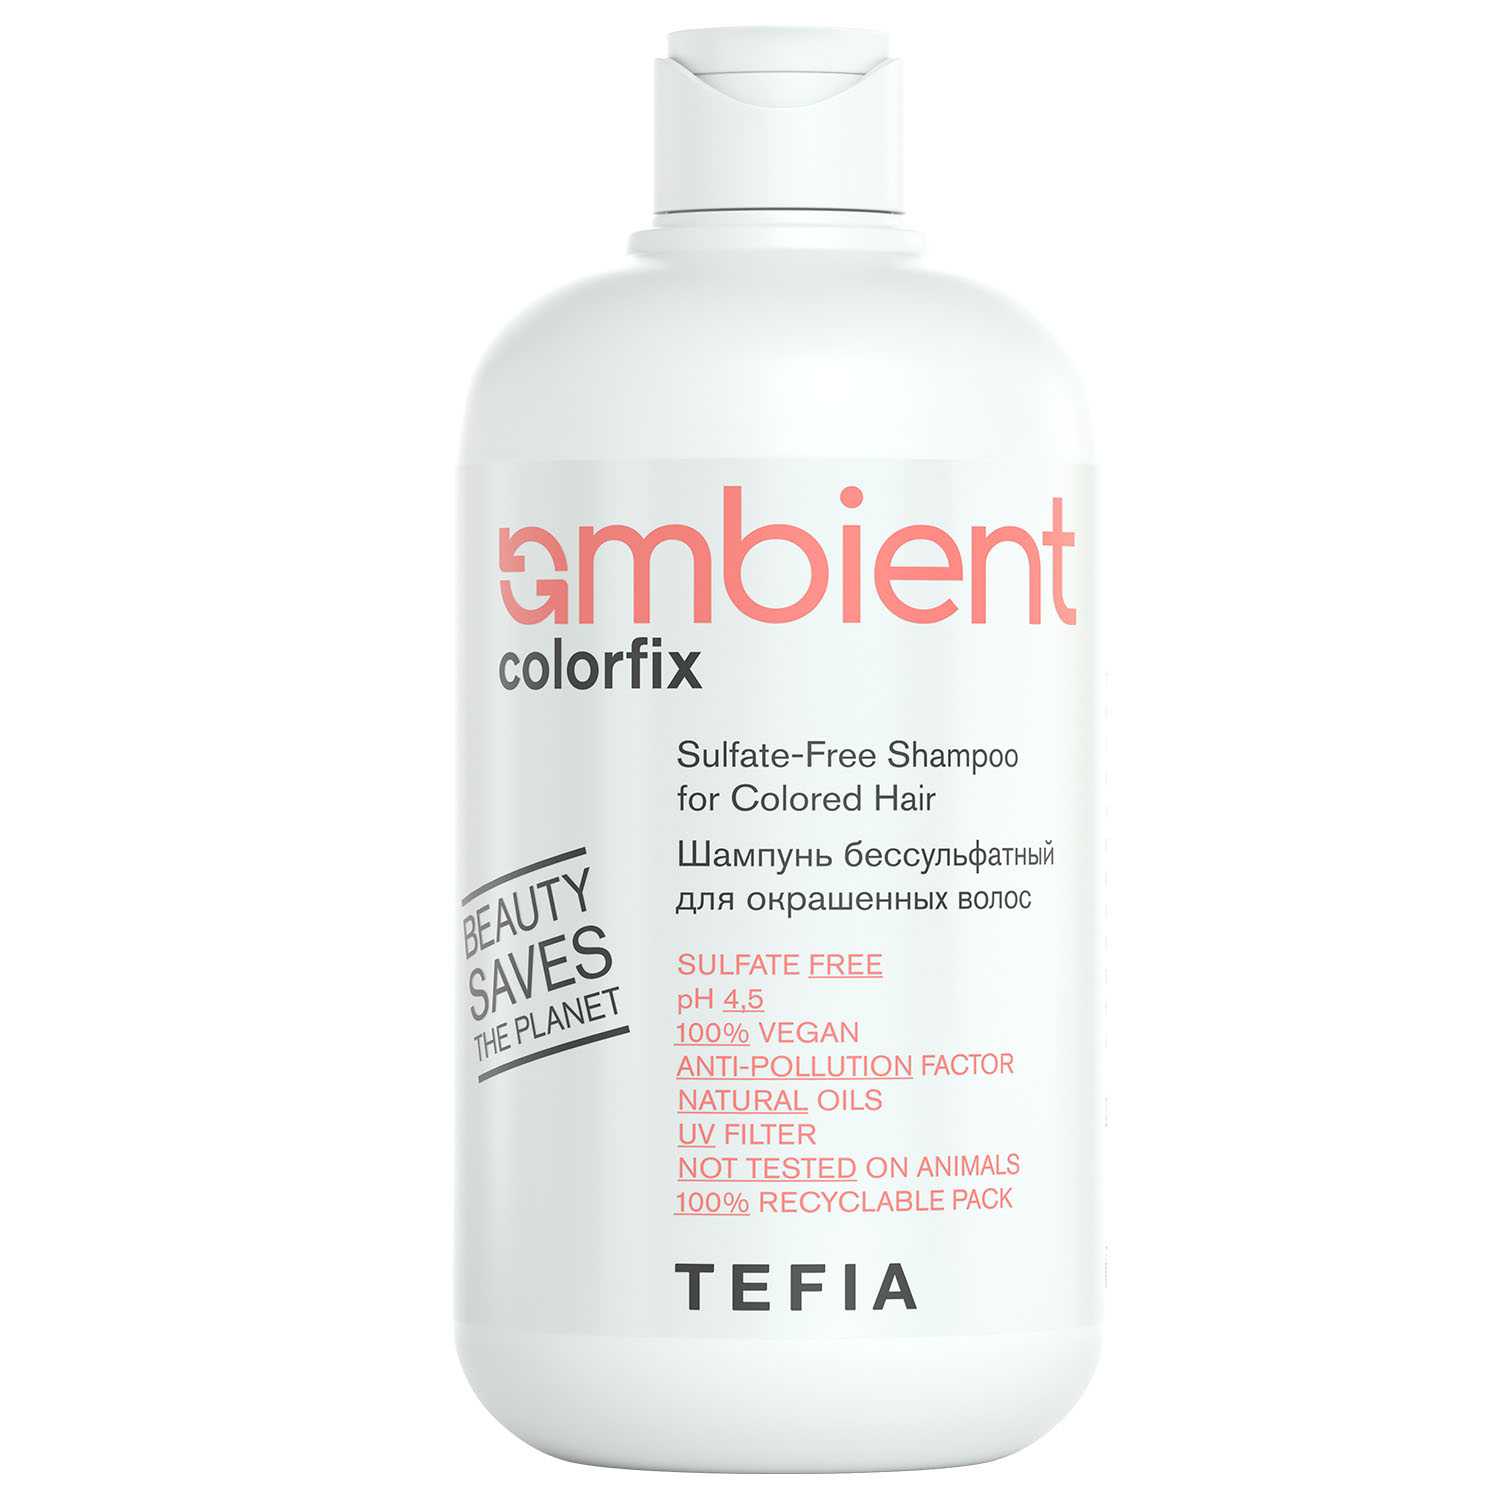 Tefia Шампунь бессульфатный для окрашенных волос Sulfate-Free Shampoo for Colored Hair, 250 мл (Tefia, Ambient) tefia бессульфатный нейтрализующий шампунь холодный фиолет cool violet shampoo 250 мл tefia ambient